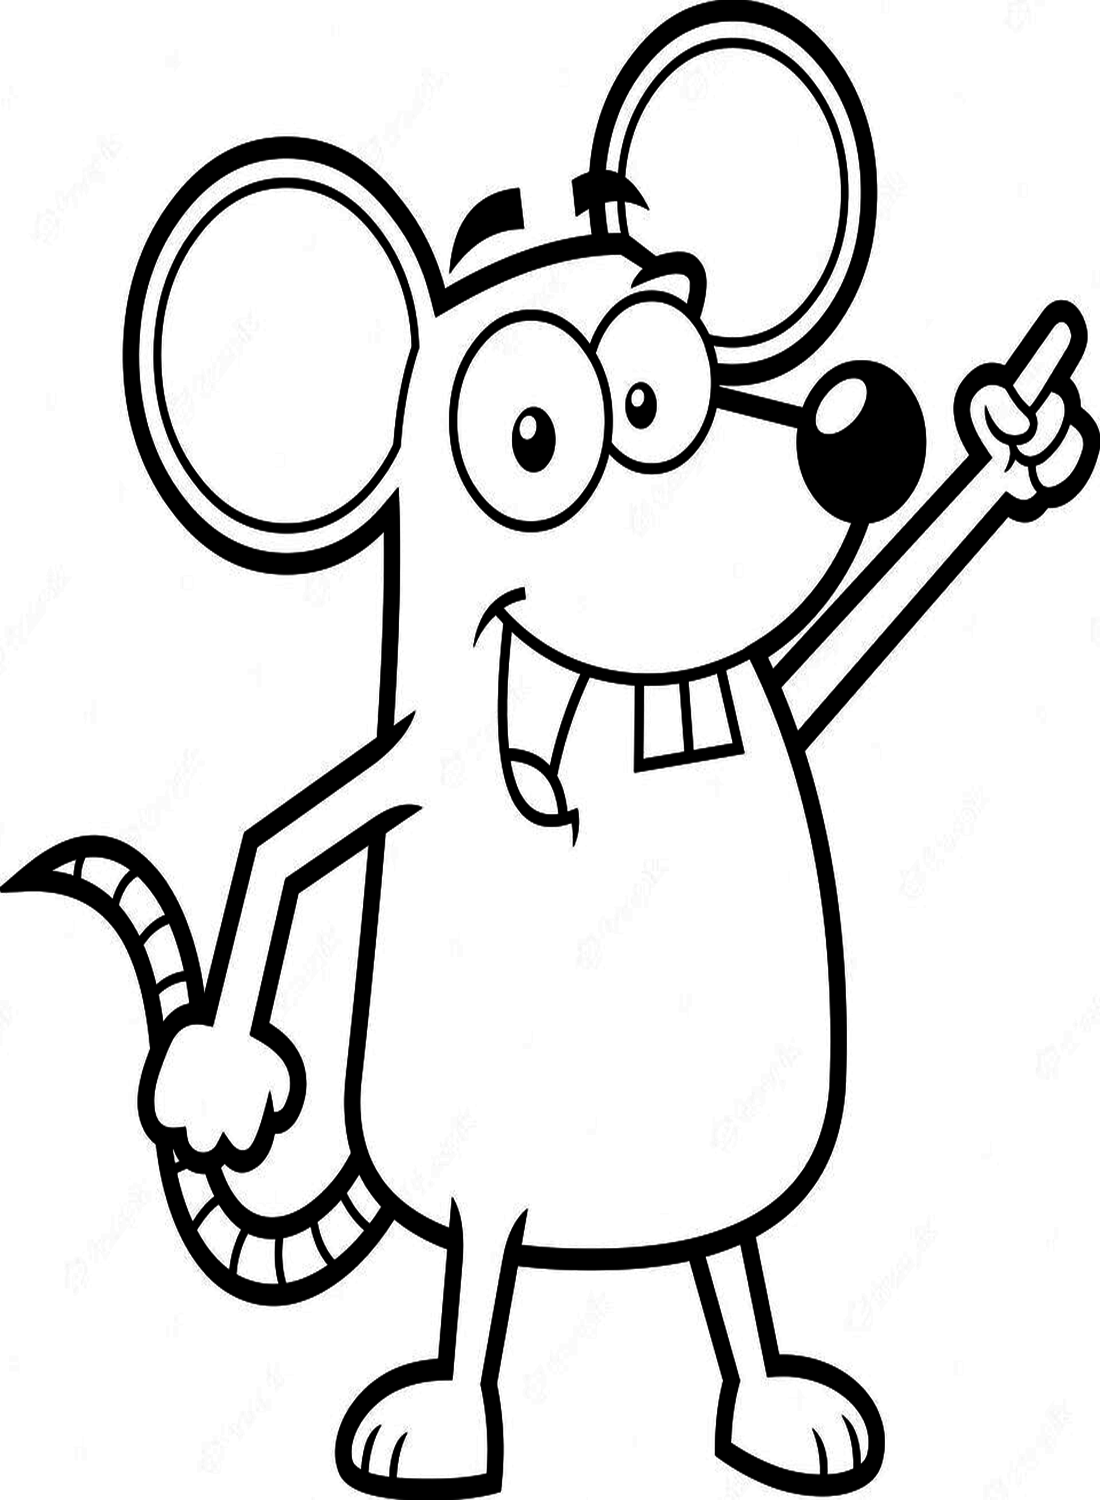 Забавный персонаж мультфильма "Крыса", указывающий на крысу